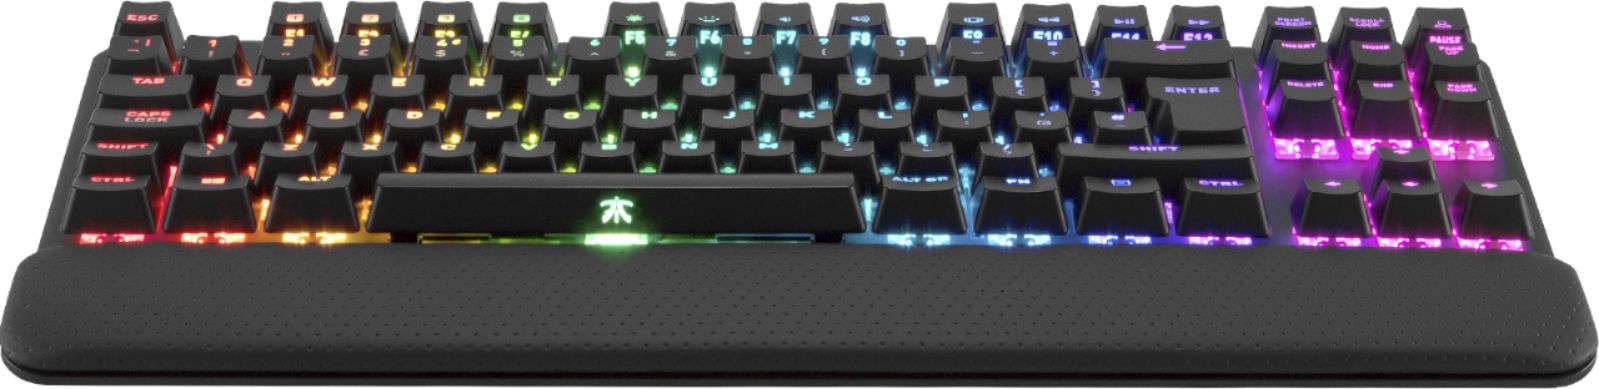 Fnatic - Mini Streak RGB Wired Gaming Mechanical CHERRY MX Silent Red Switch Keyboard with RGB Back Lighting - Black